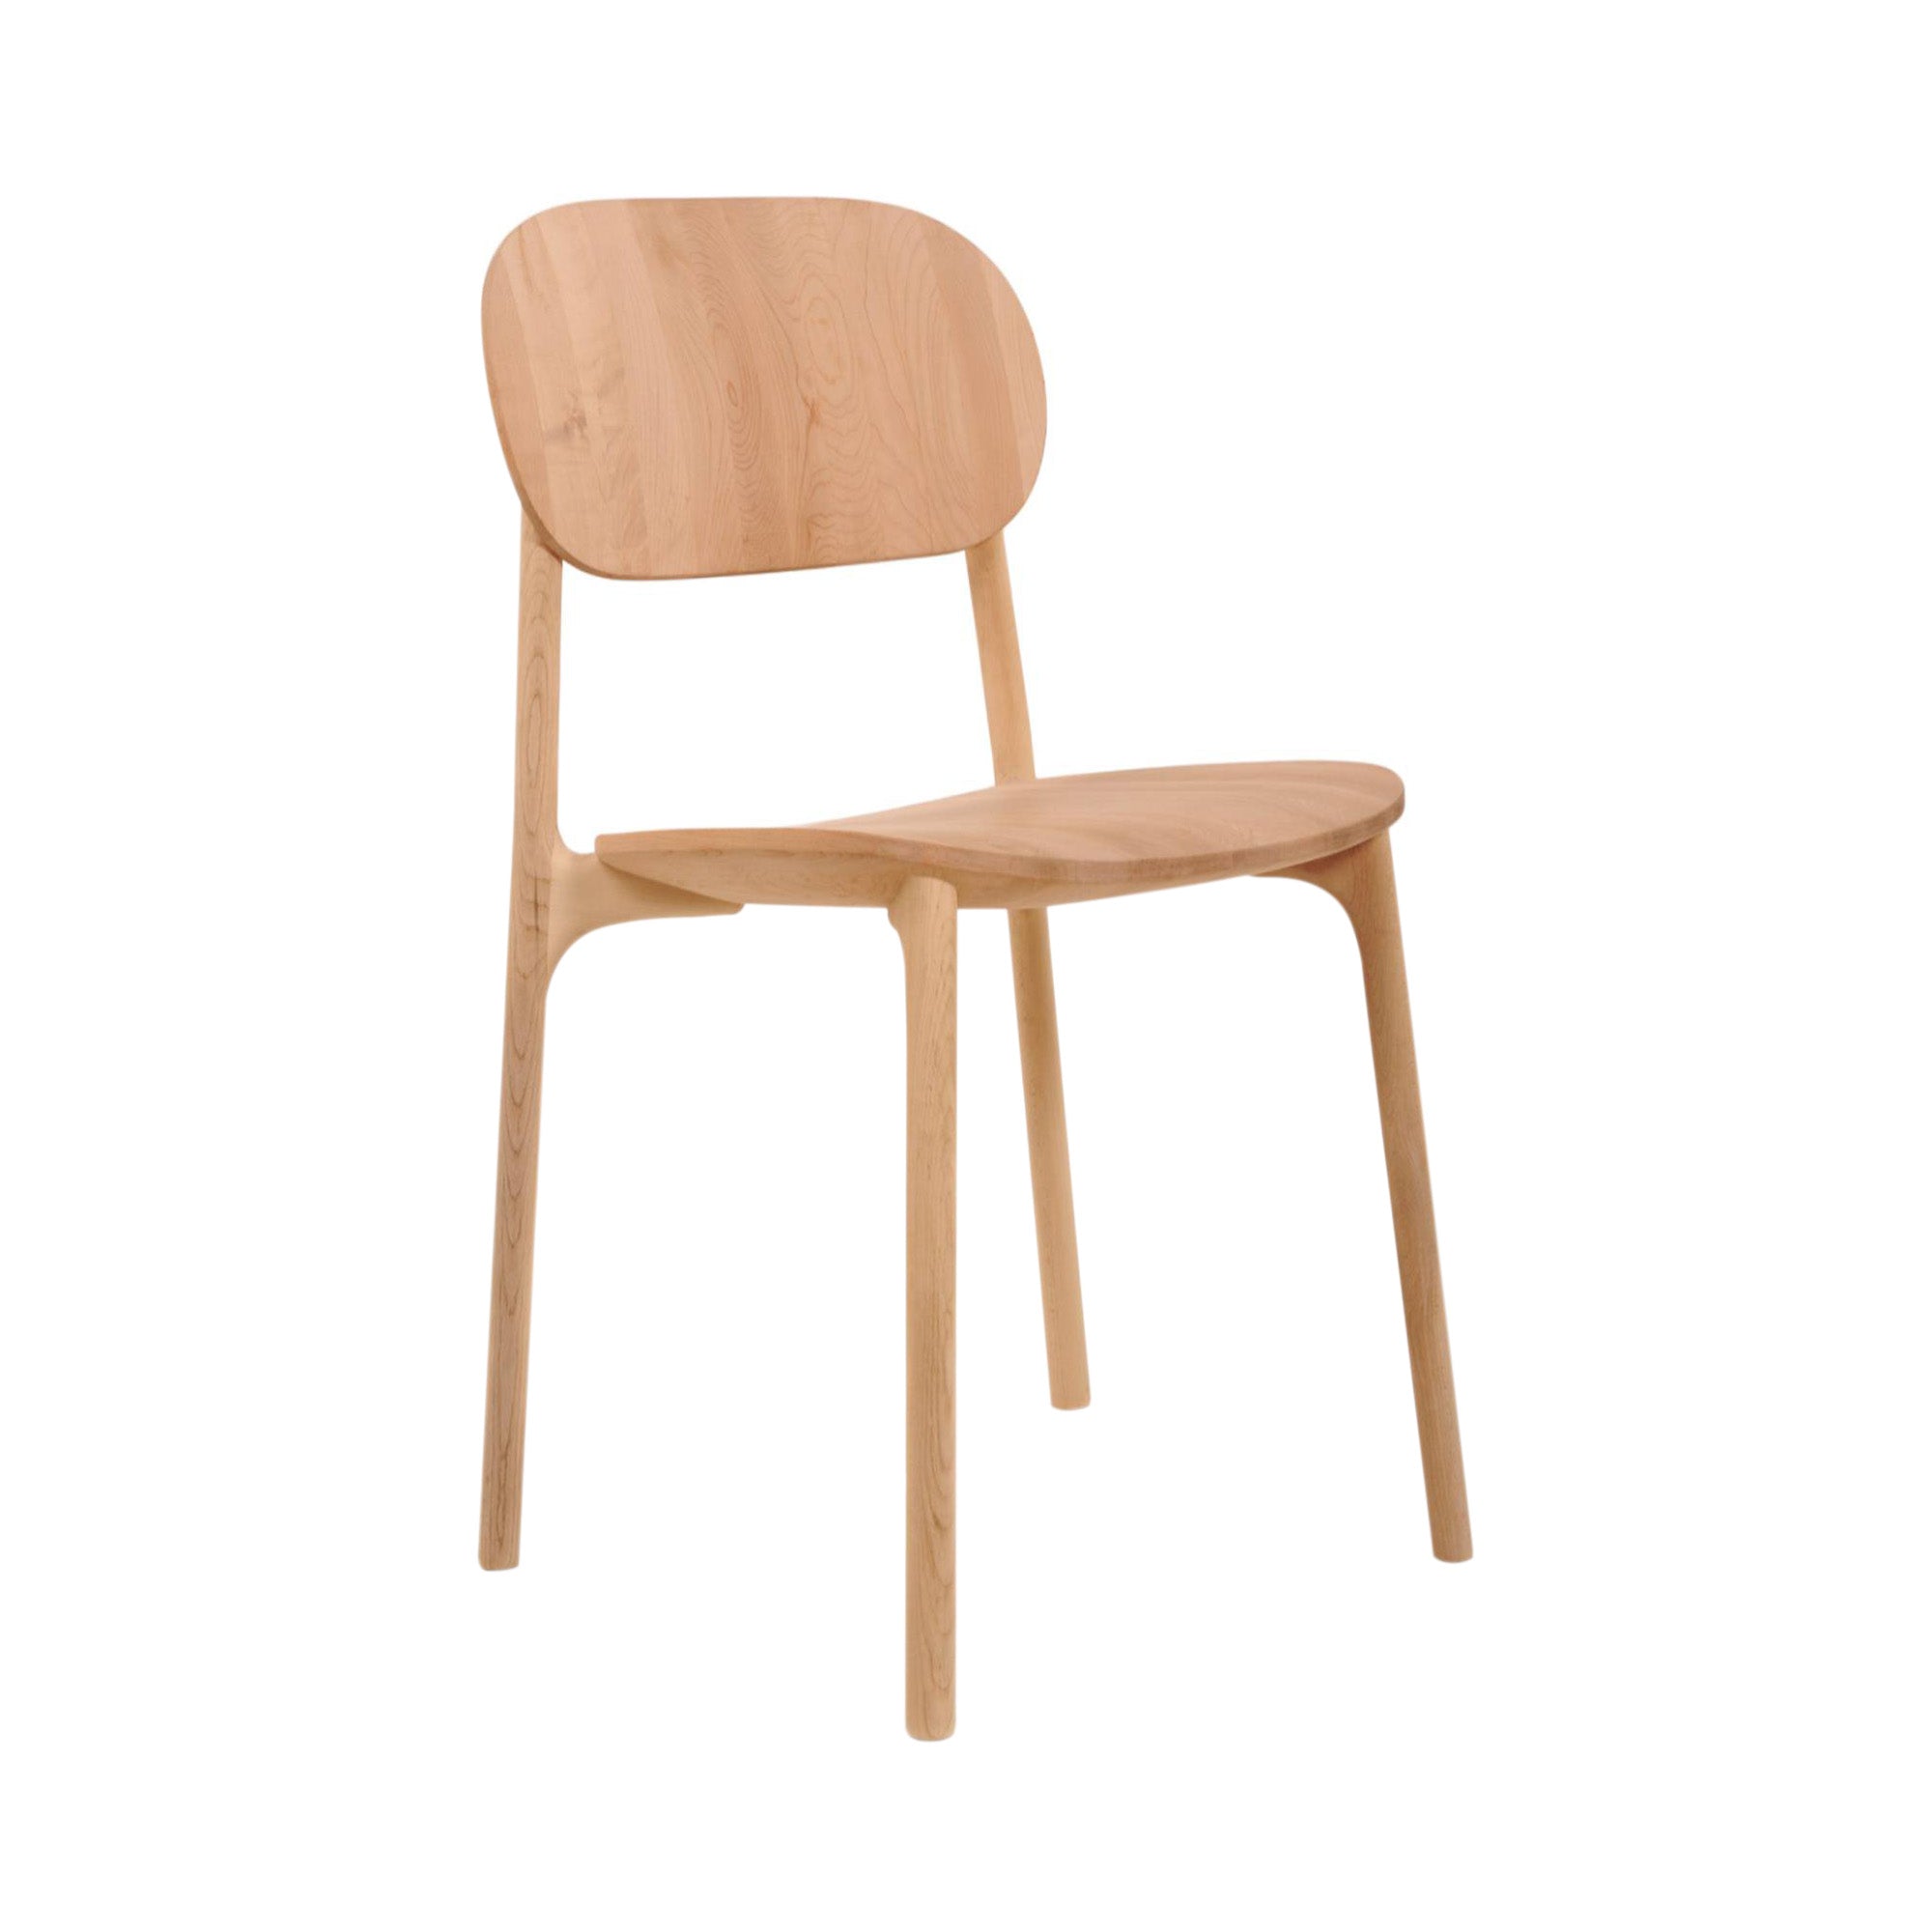 Unna Chair: Reshma Edge III + Oiled Oak + Black + Without Cushion